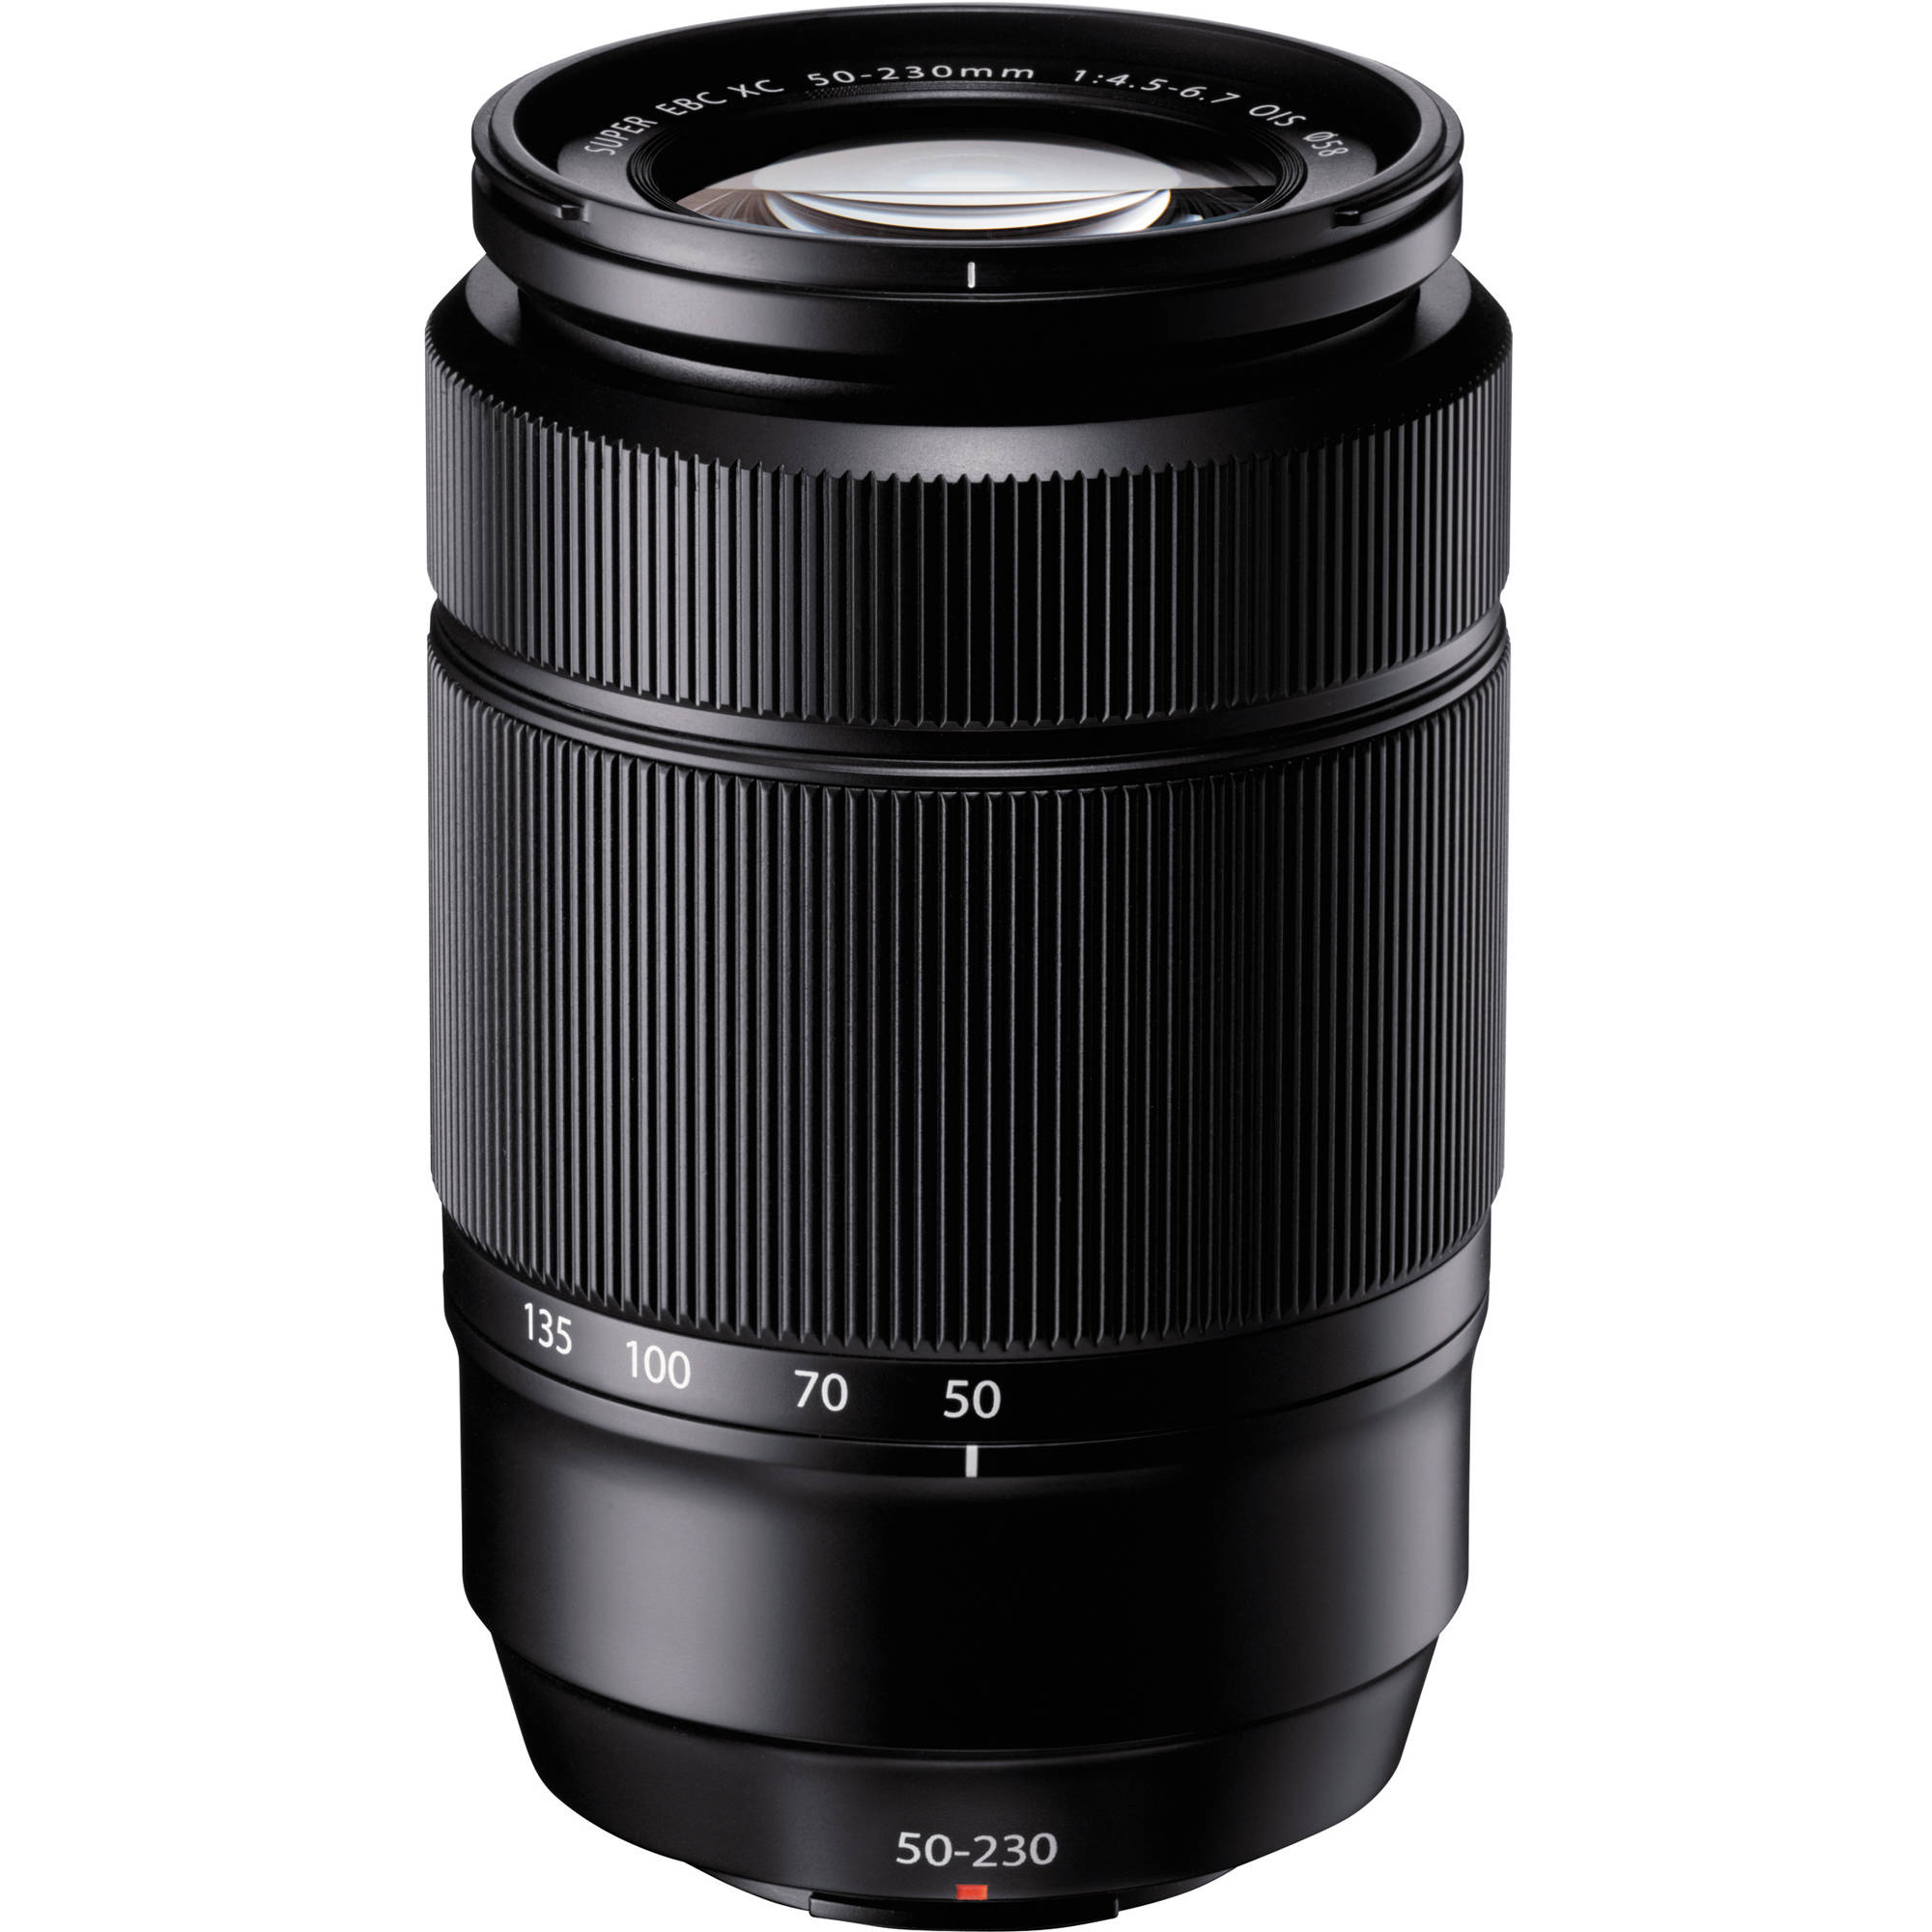 Fujinon Lens XC 50-230mm F4.5-6.7 OIS